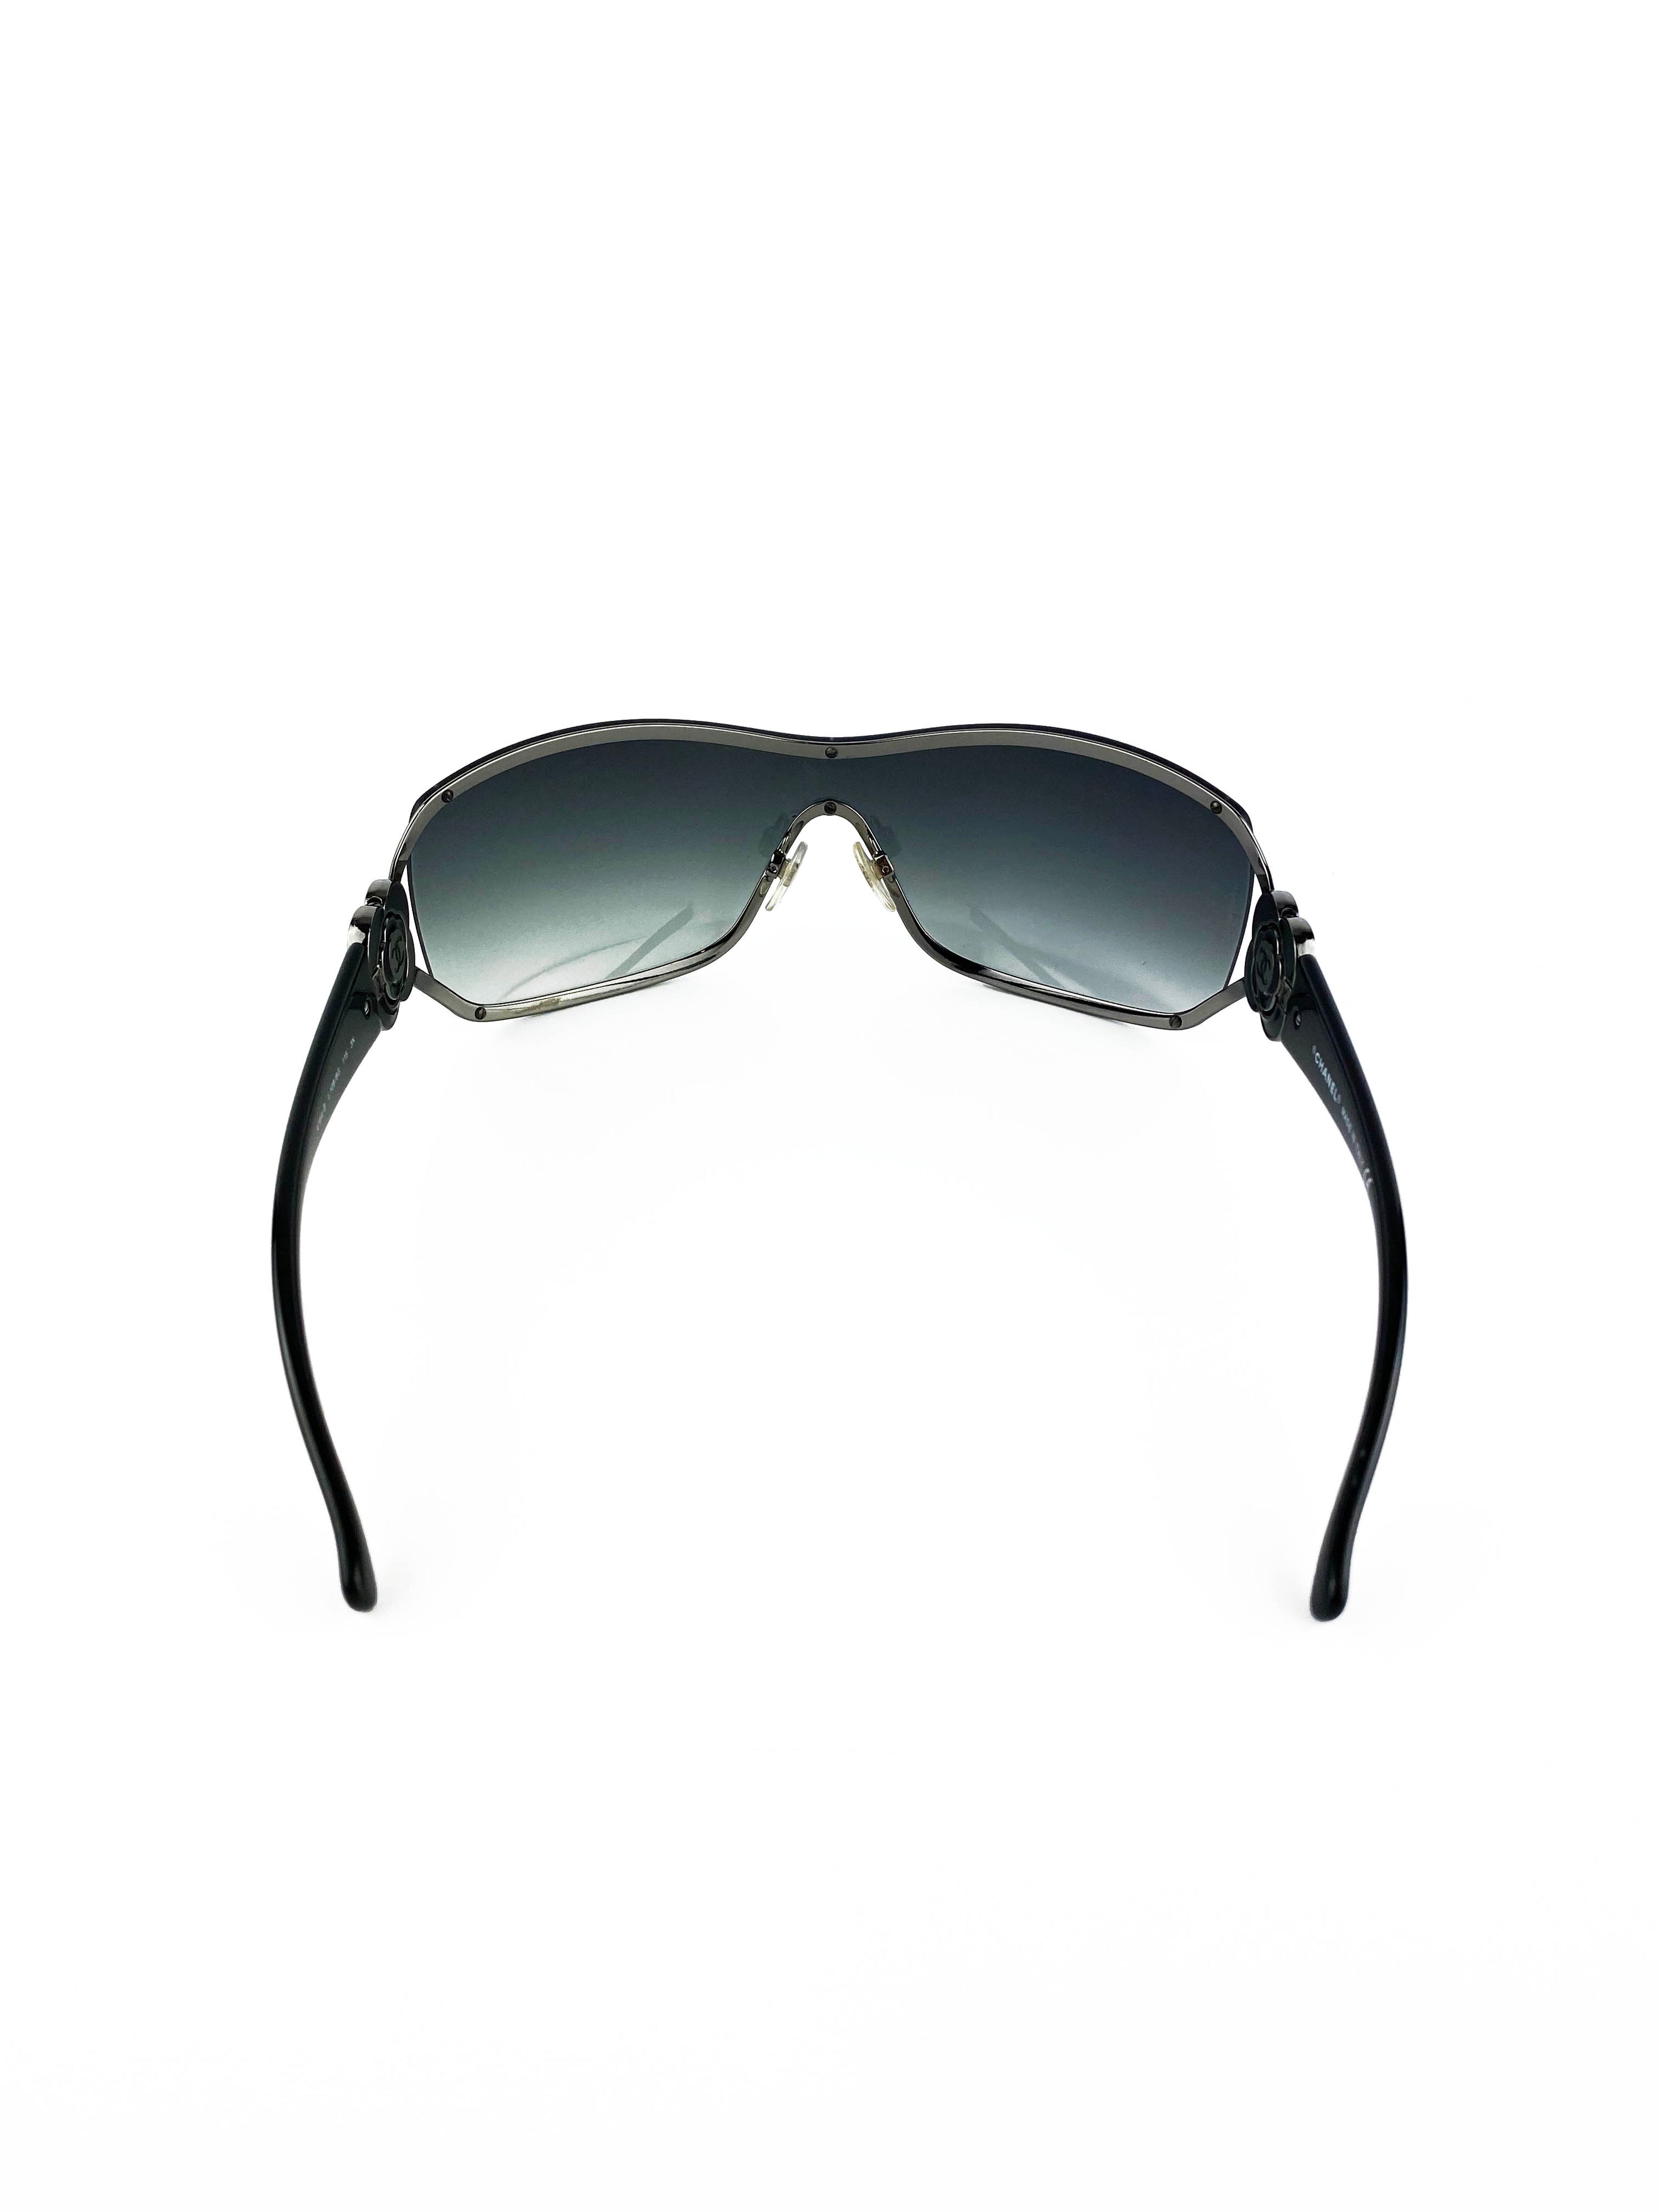 Chanel Black 4164-B Sunglasses